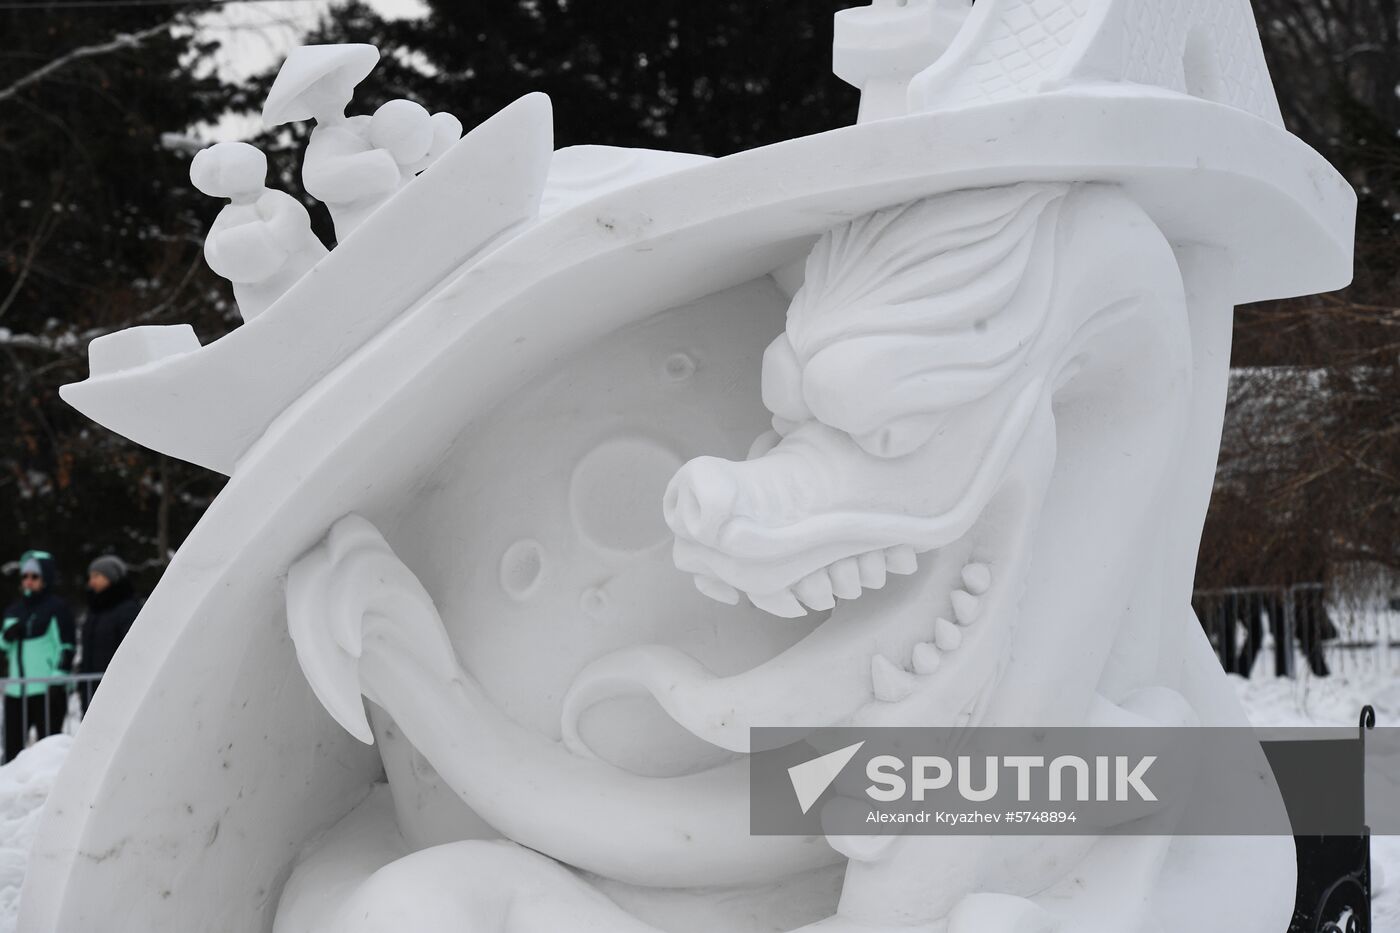 Russia Snow Sculptures